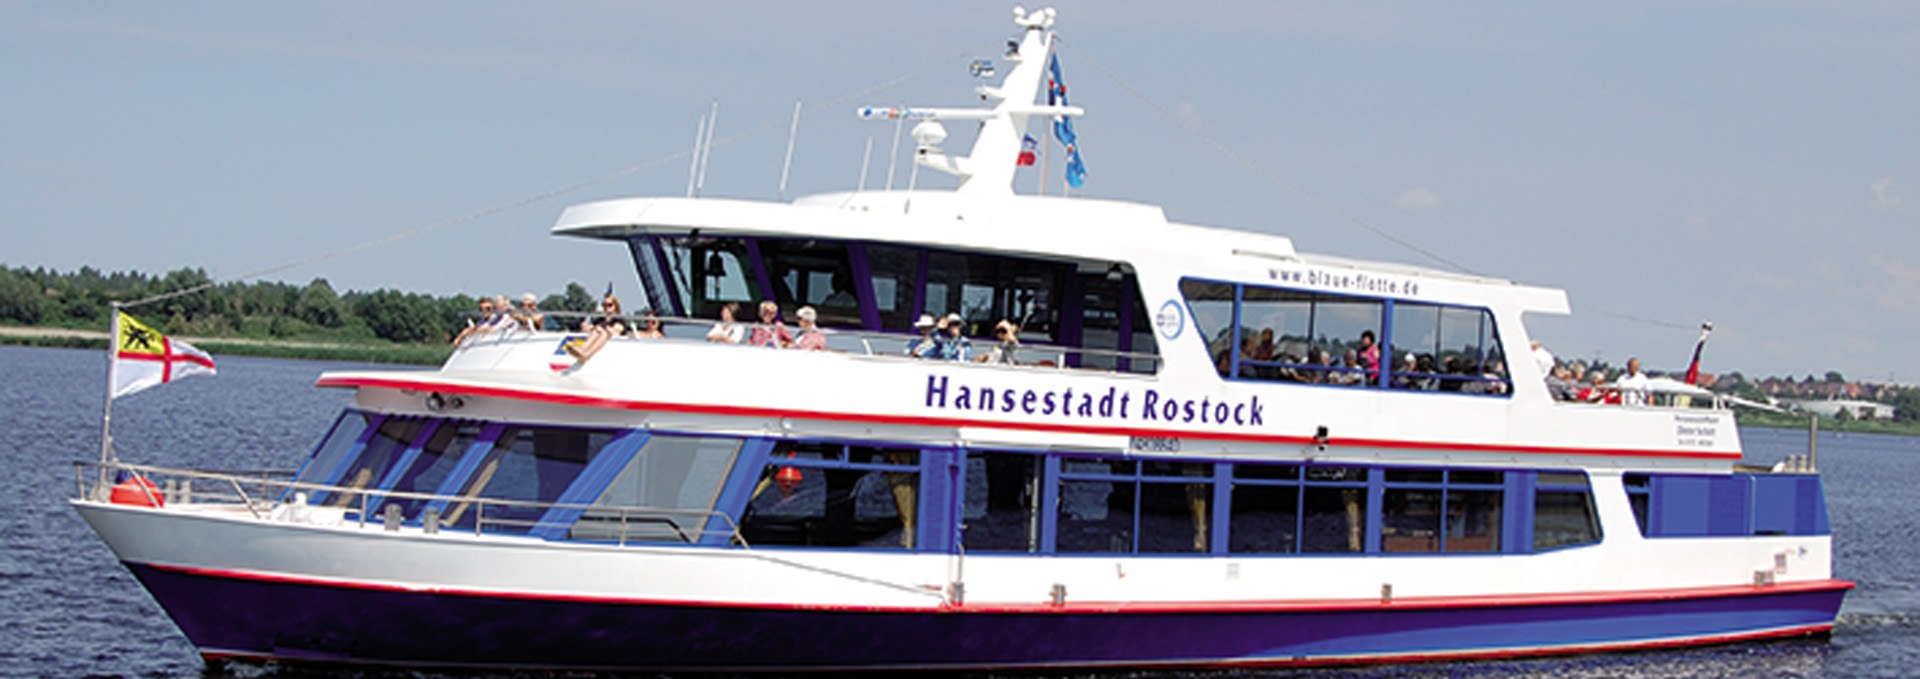 Harbor tour or beach line service along the Warnow River, © Personenschifffahrt Schütt